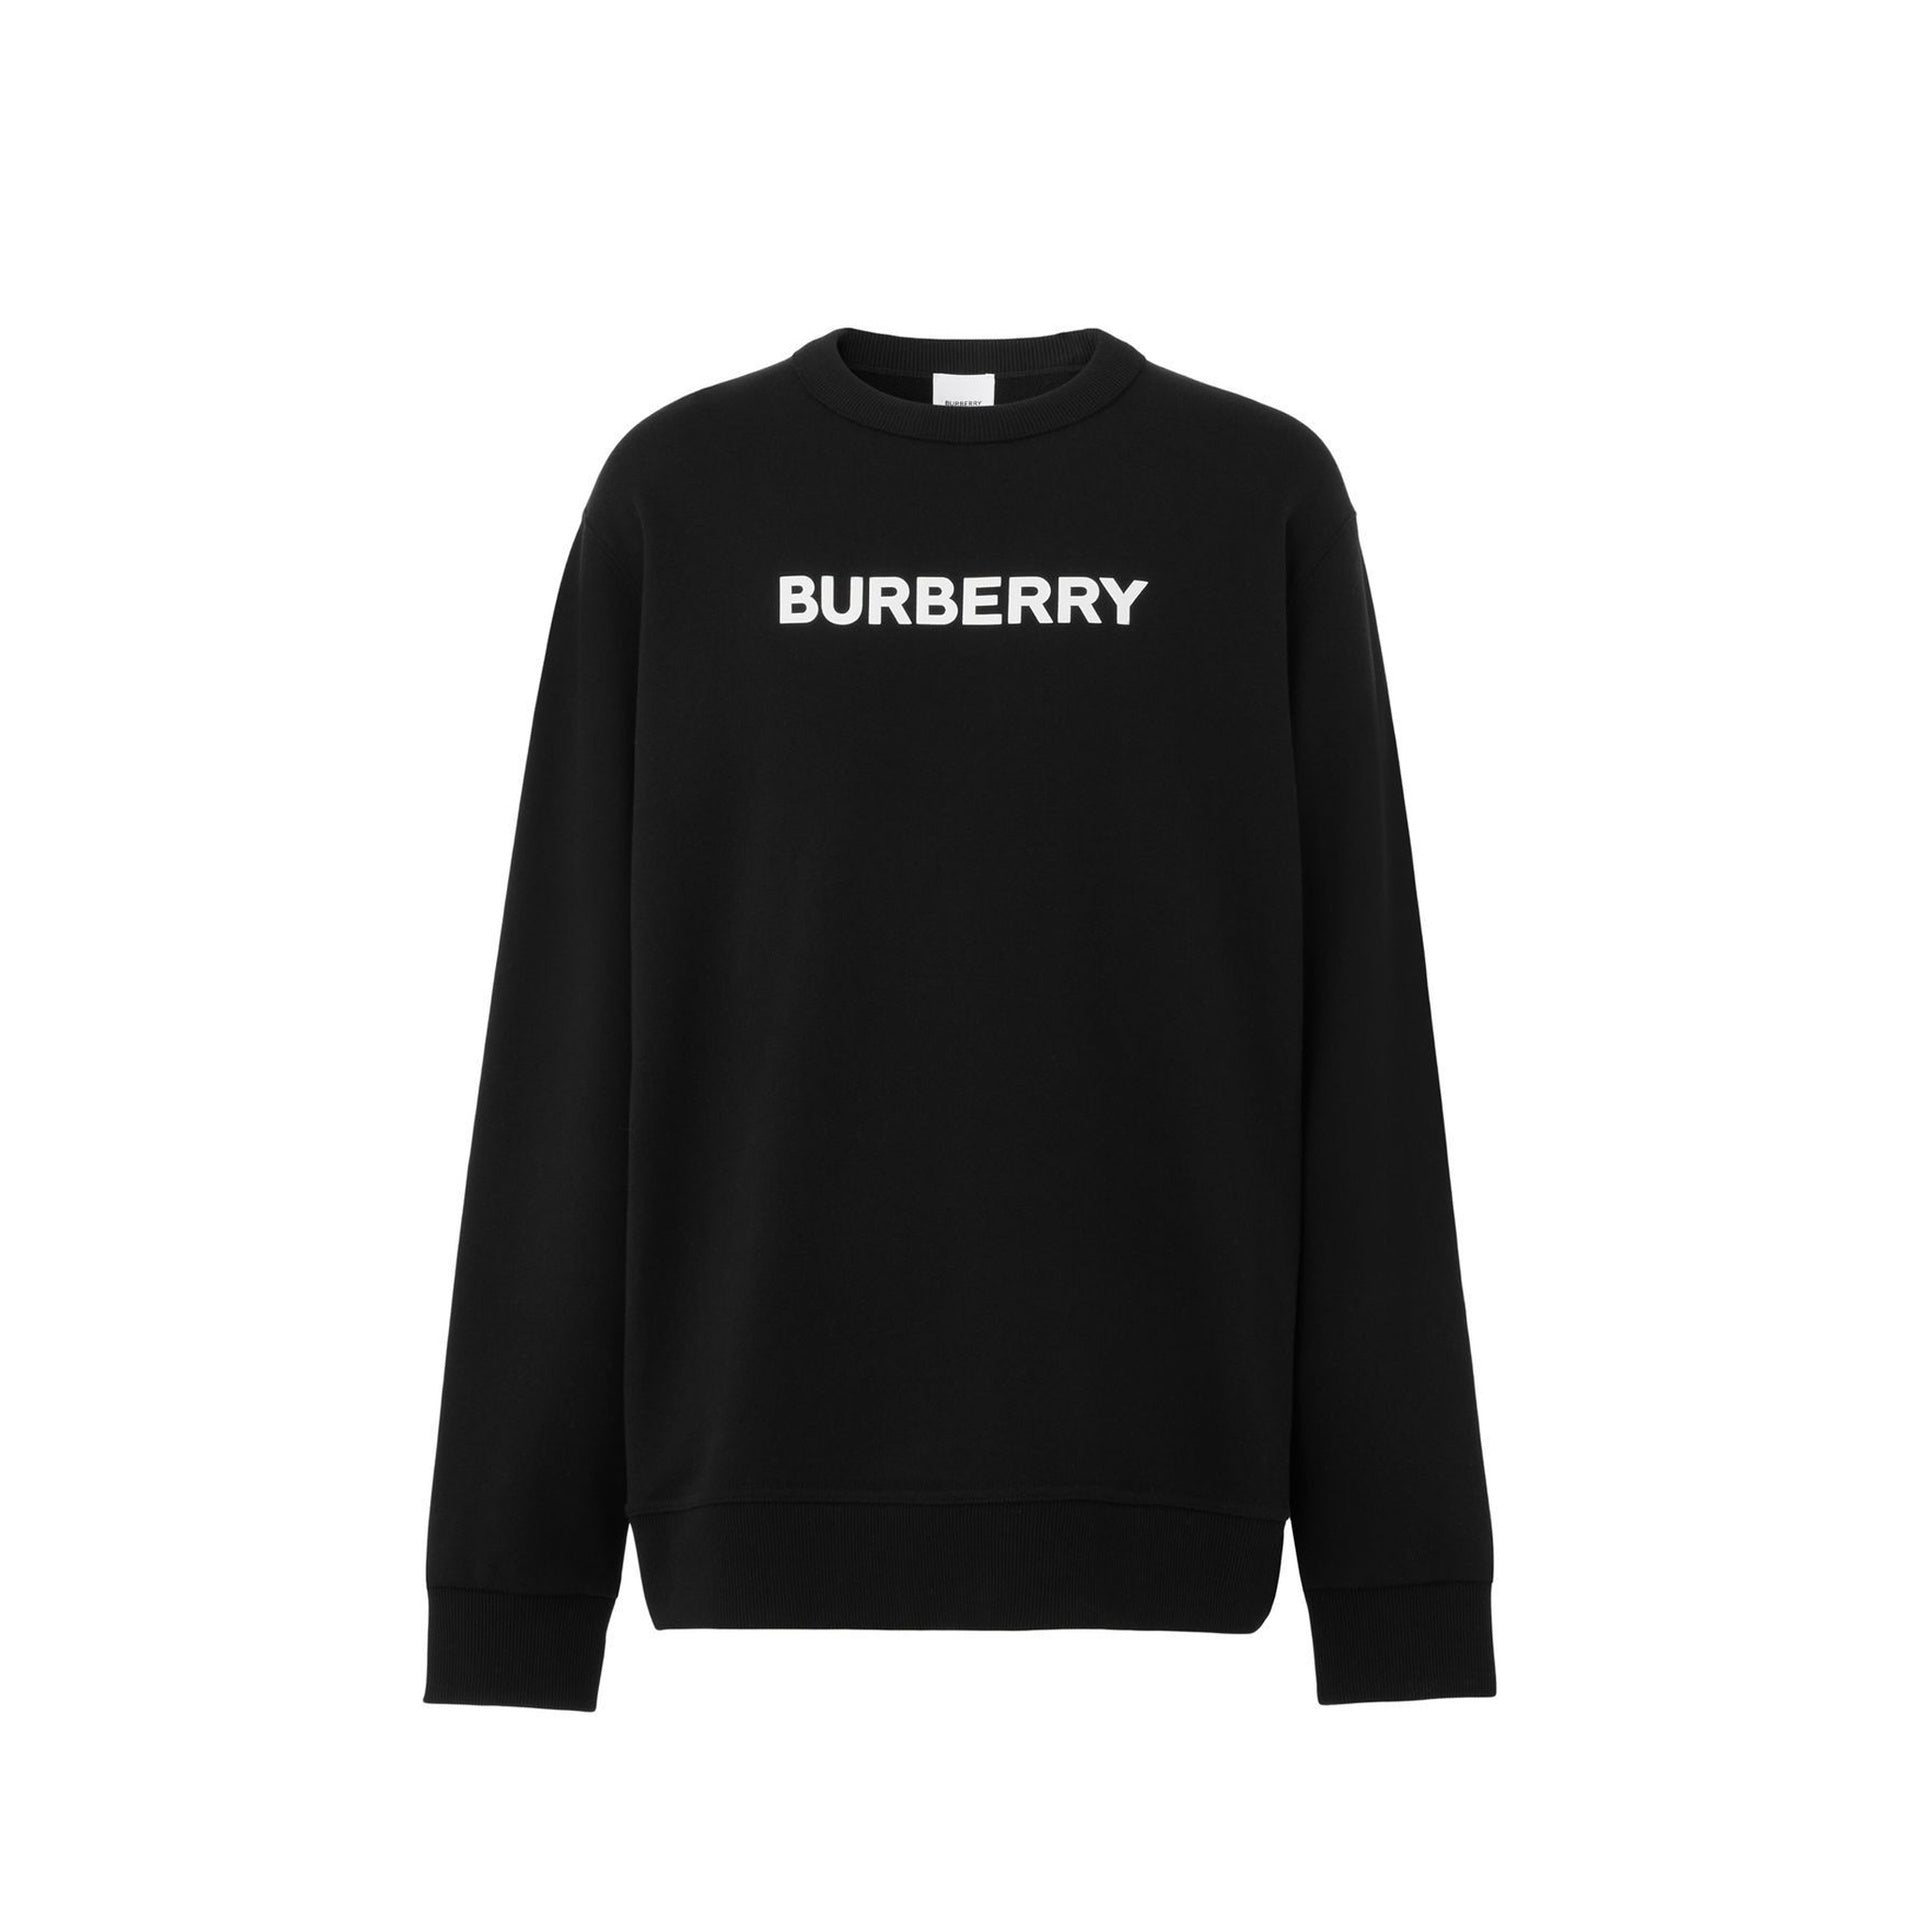 BURBERRY_Burberry_Logo_Cotton_Sweatshirt_8055312-BURLOW_A1189_Black_1.jpg